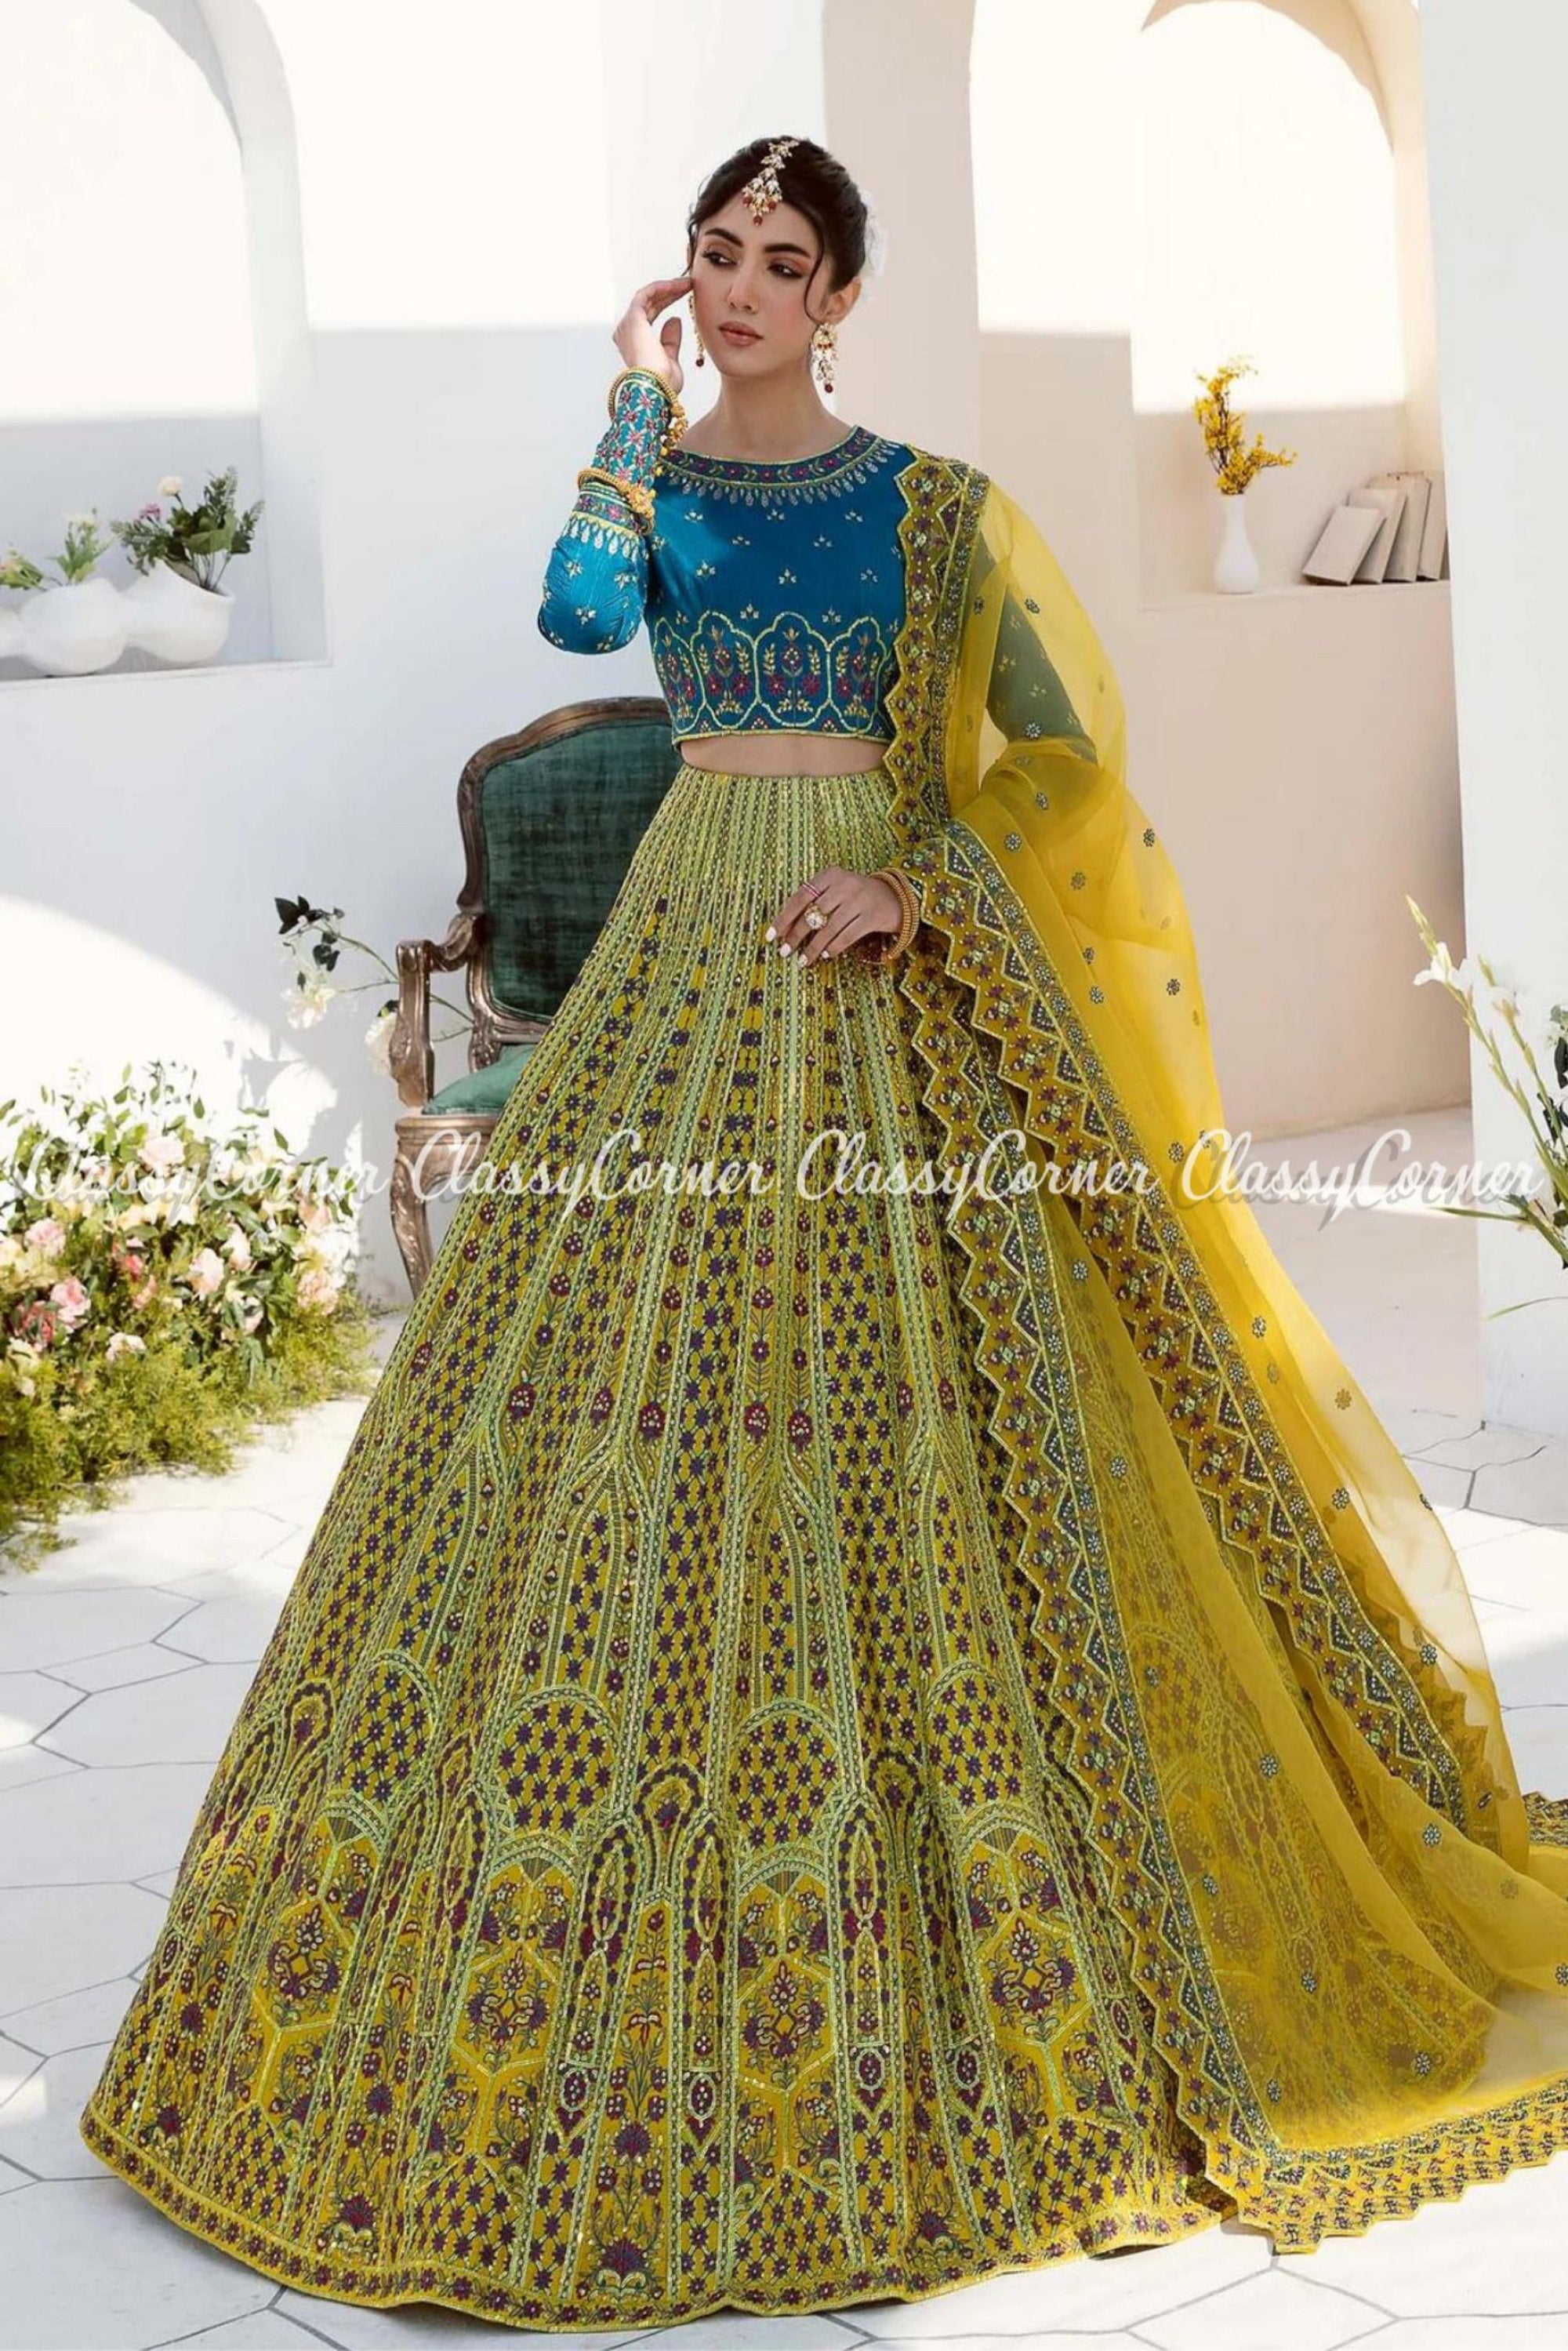 pakistani bridal outfits weddings